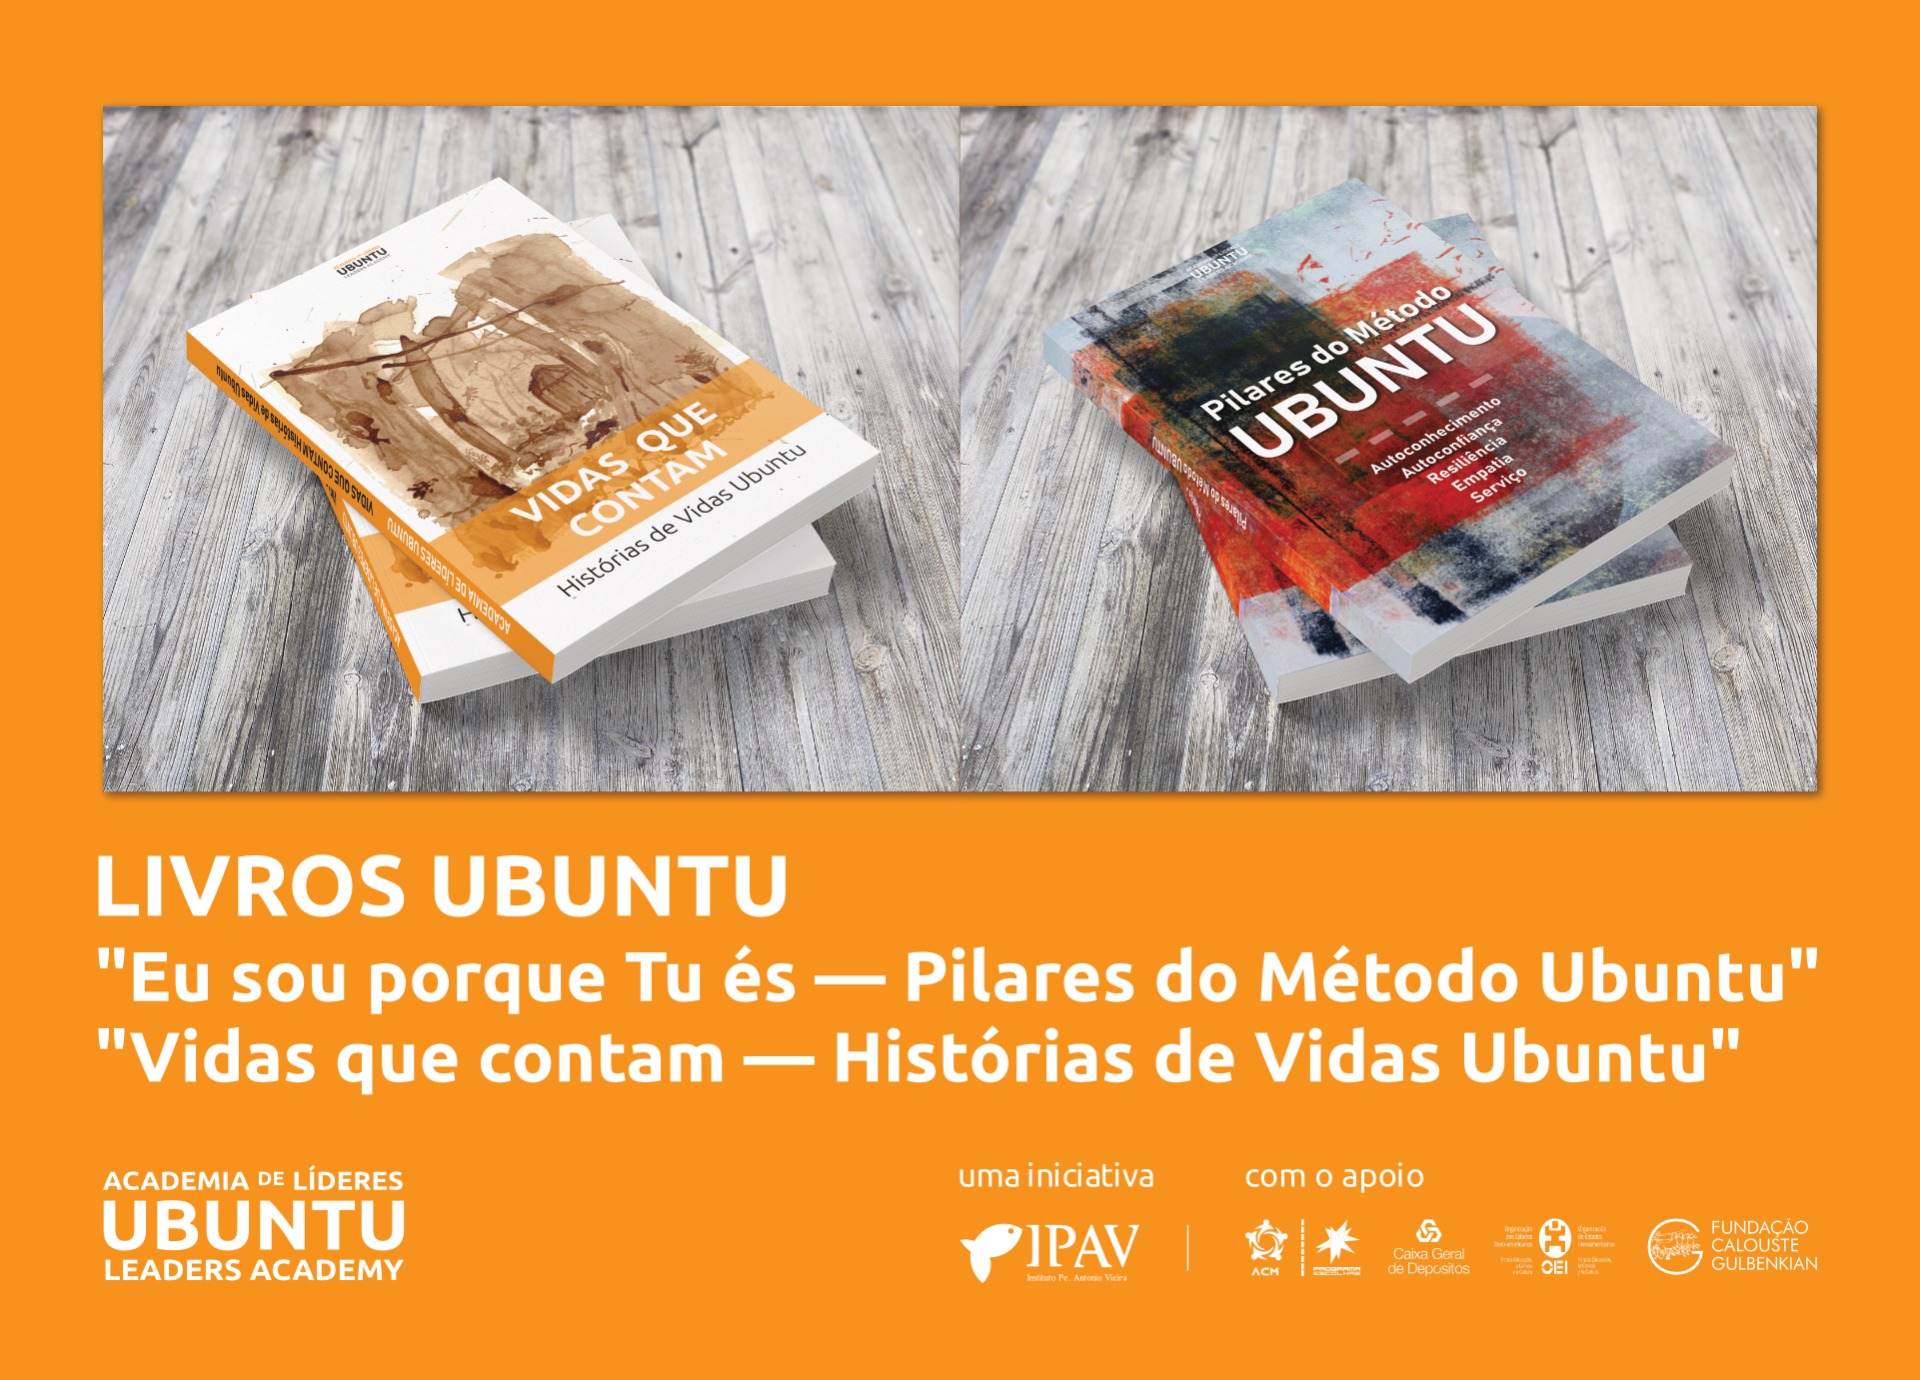 Livros Ubuntu Book "Lives that Matter"